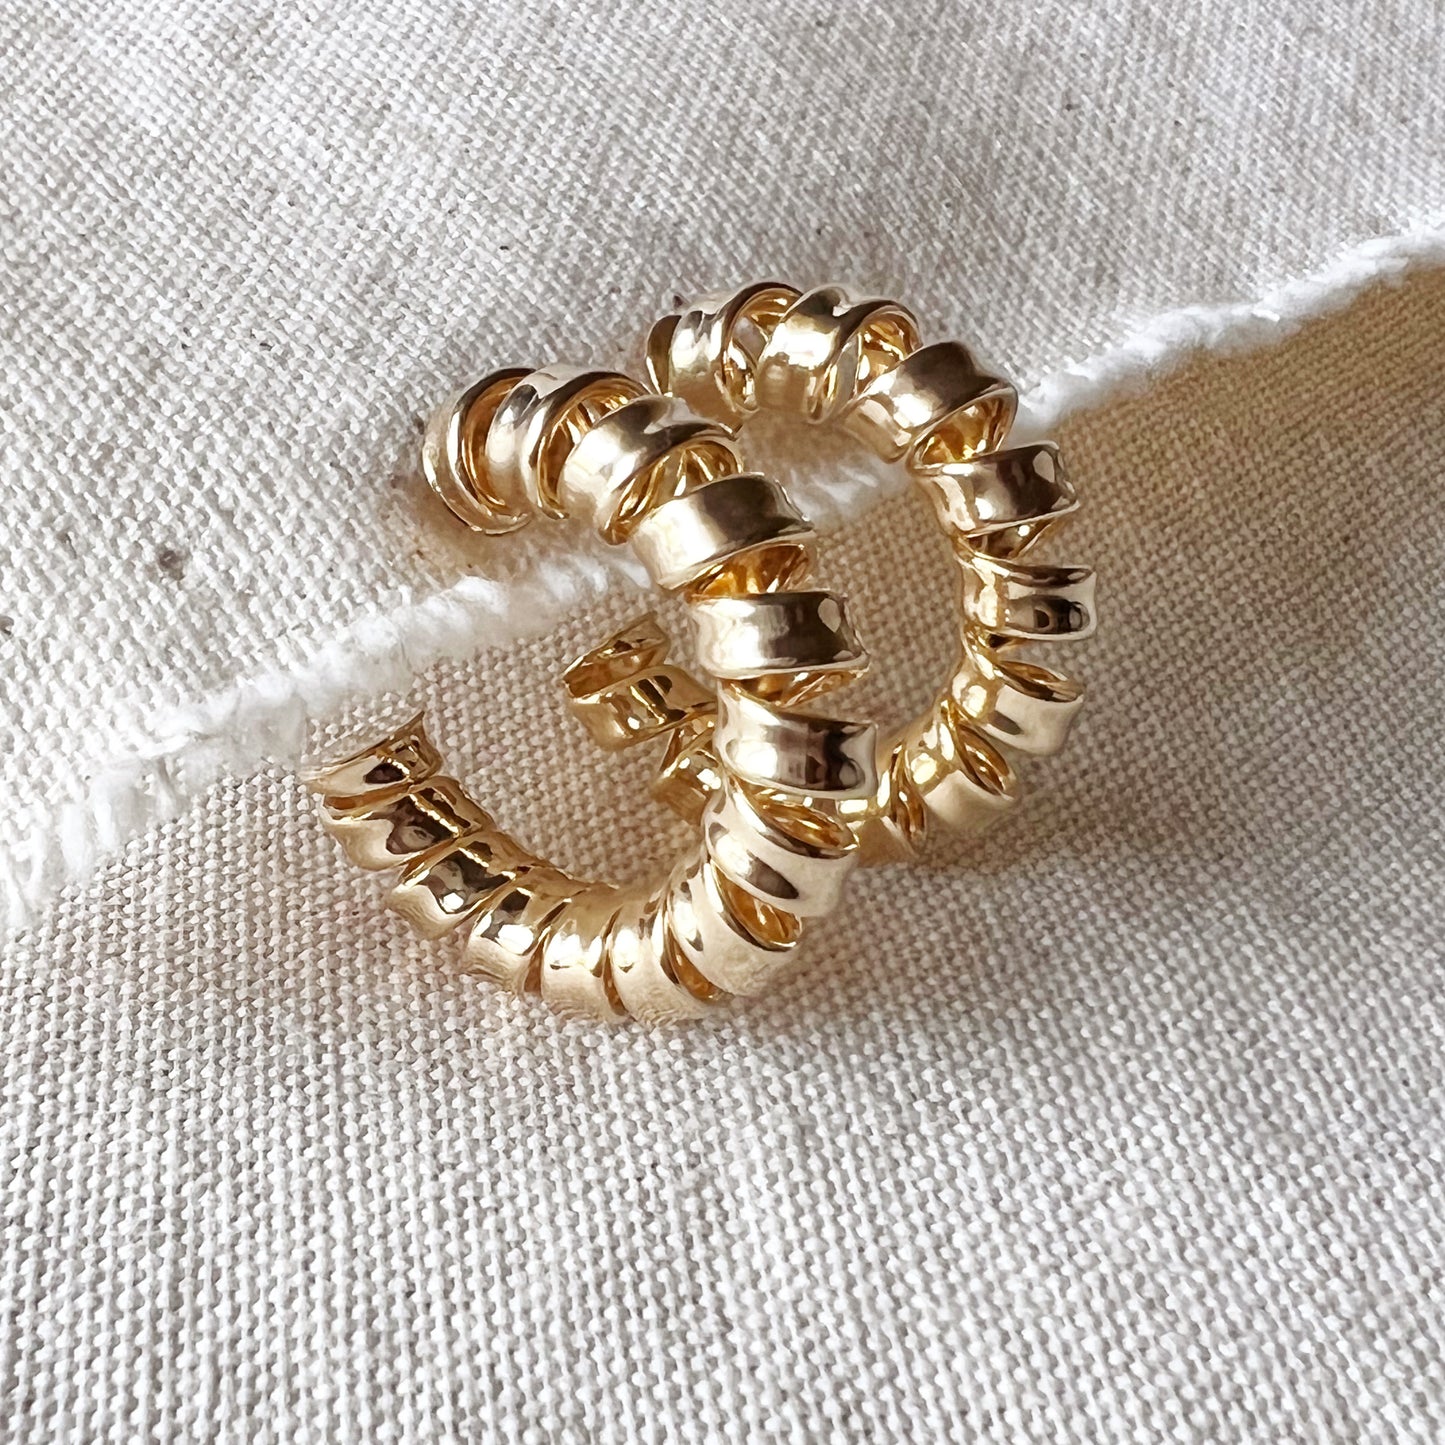 GoldFi 18k Gold Filled Curly C-Hoop Earrings Large